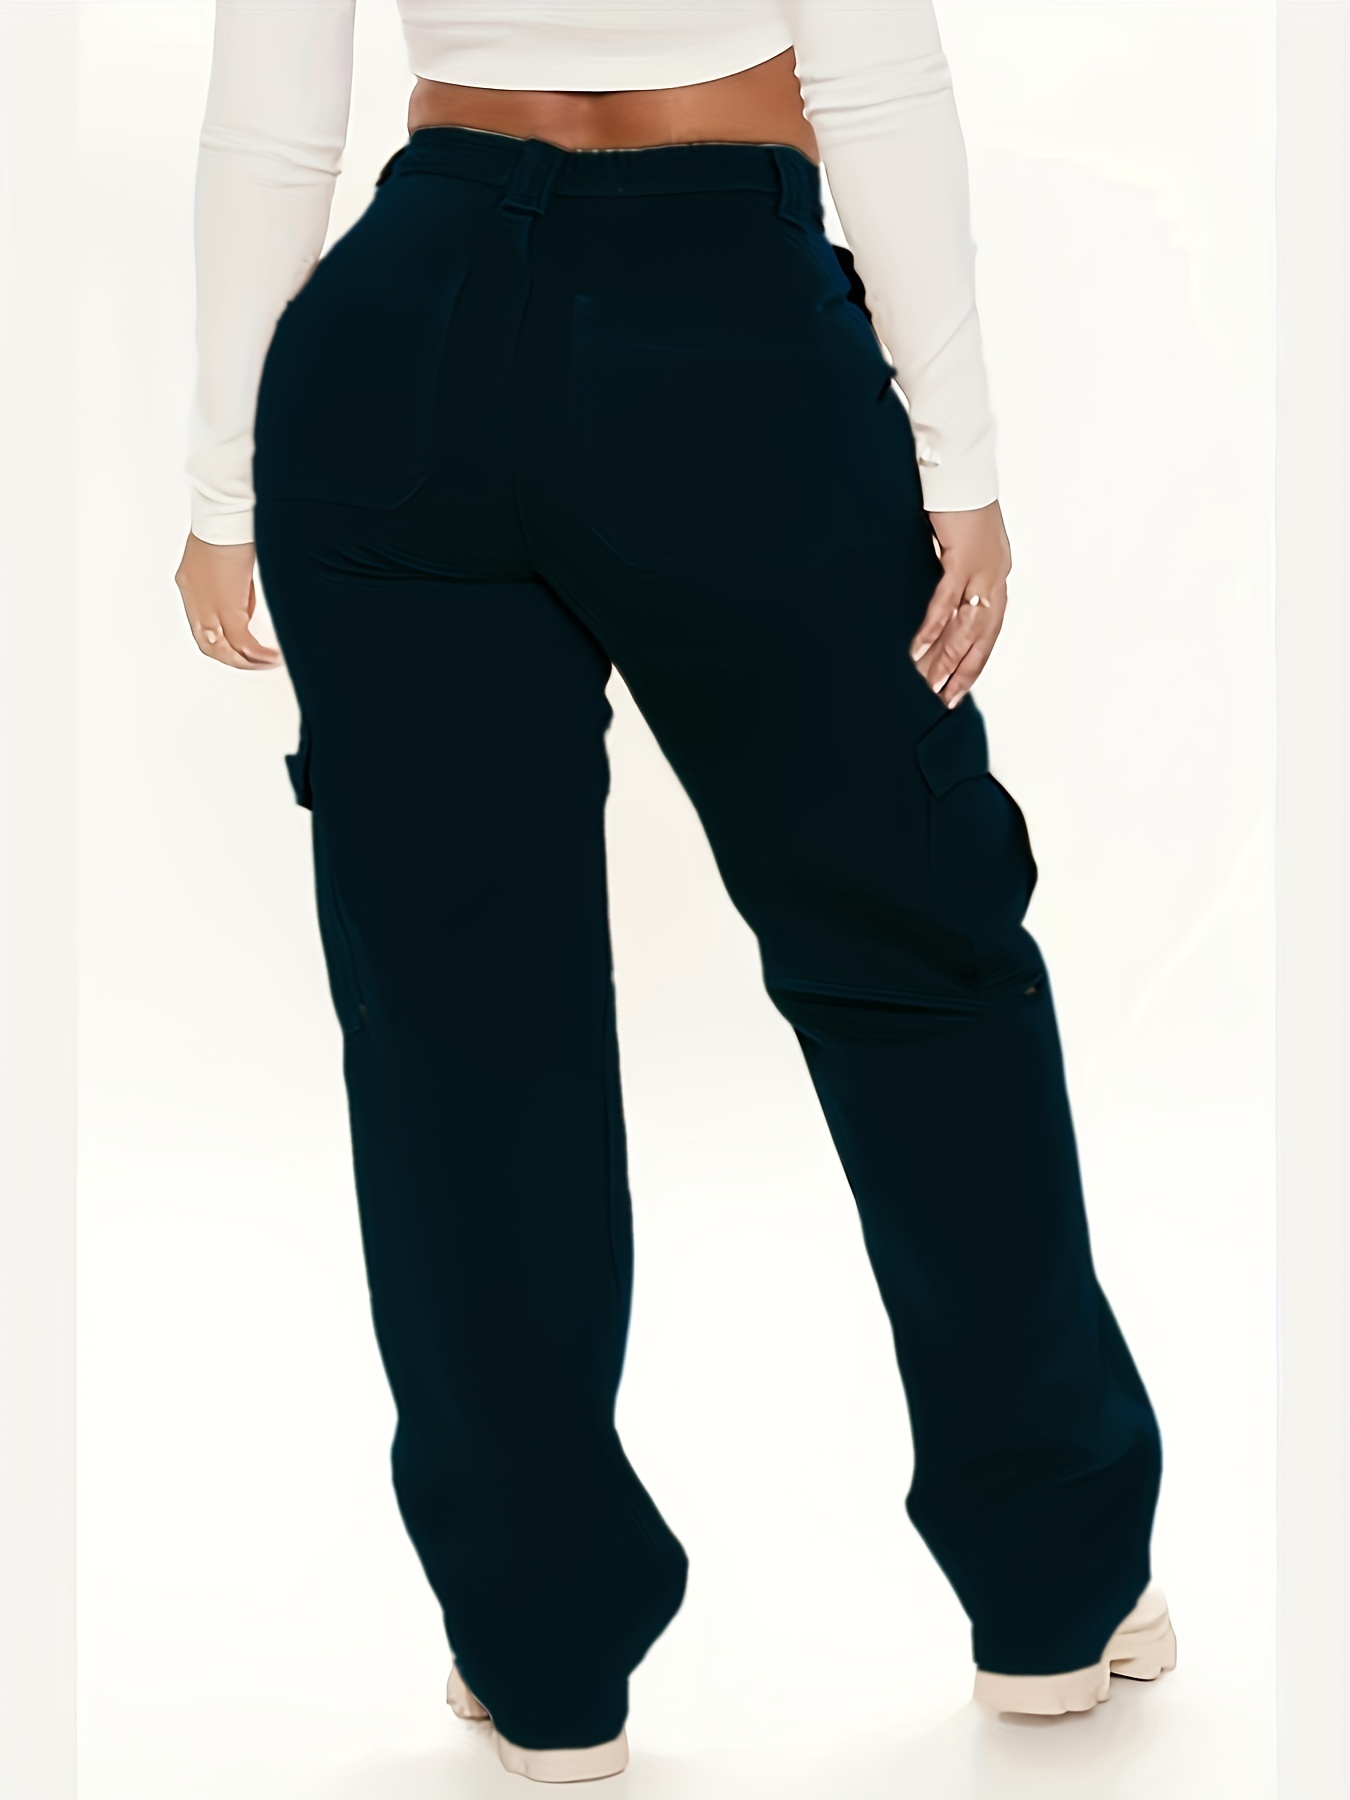 KSODFNXH Cargo Pants Women Trendy Ribbon Design Denim Pants with Pockets  Comfy Elastic Waist Solid Color Overalls, A01#black, Small : :  Clothing, Shoes & Accessories